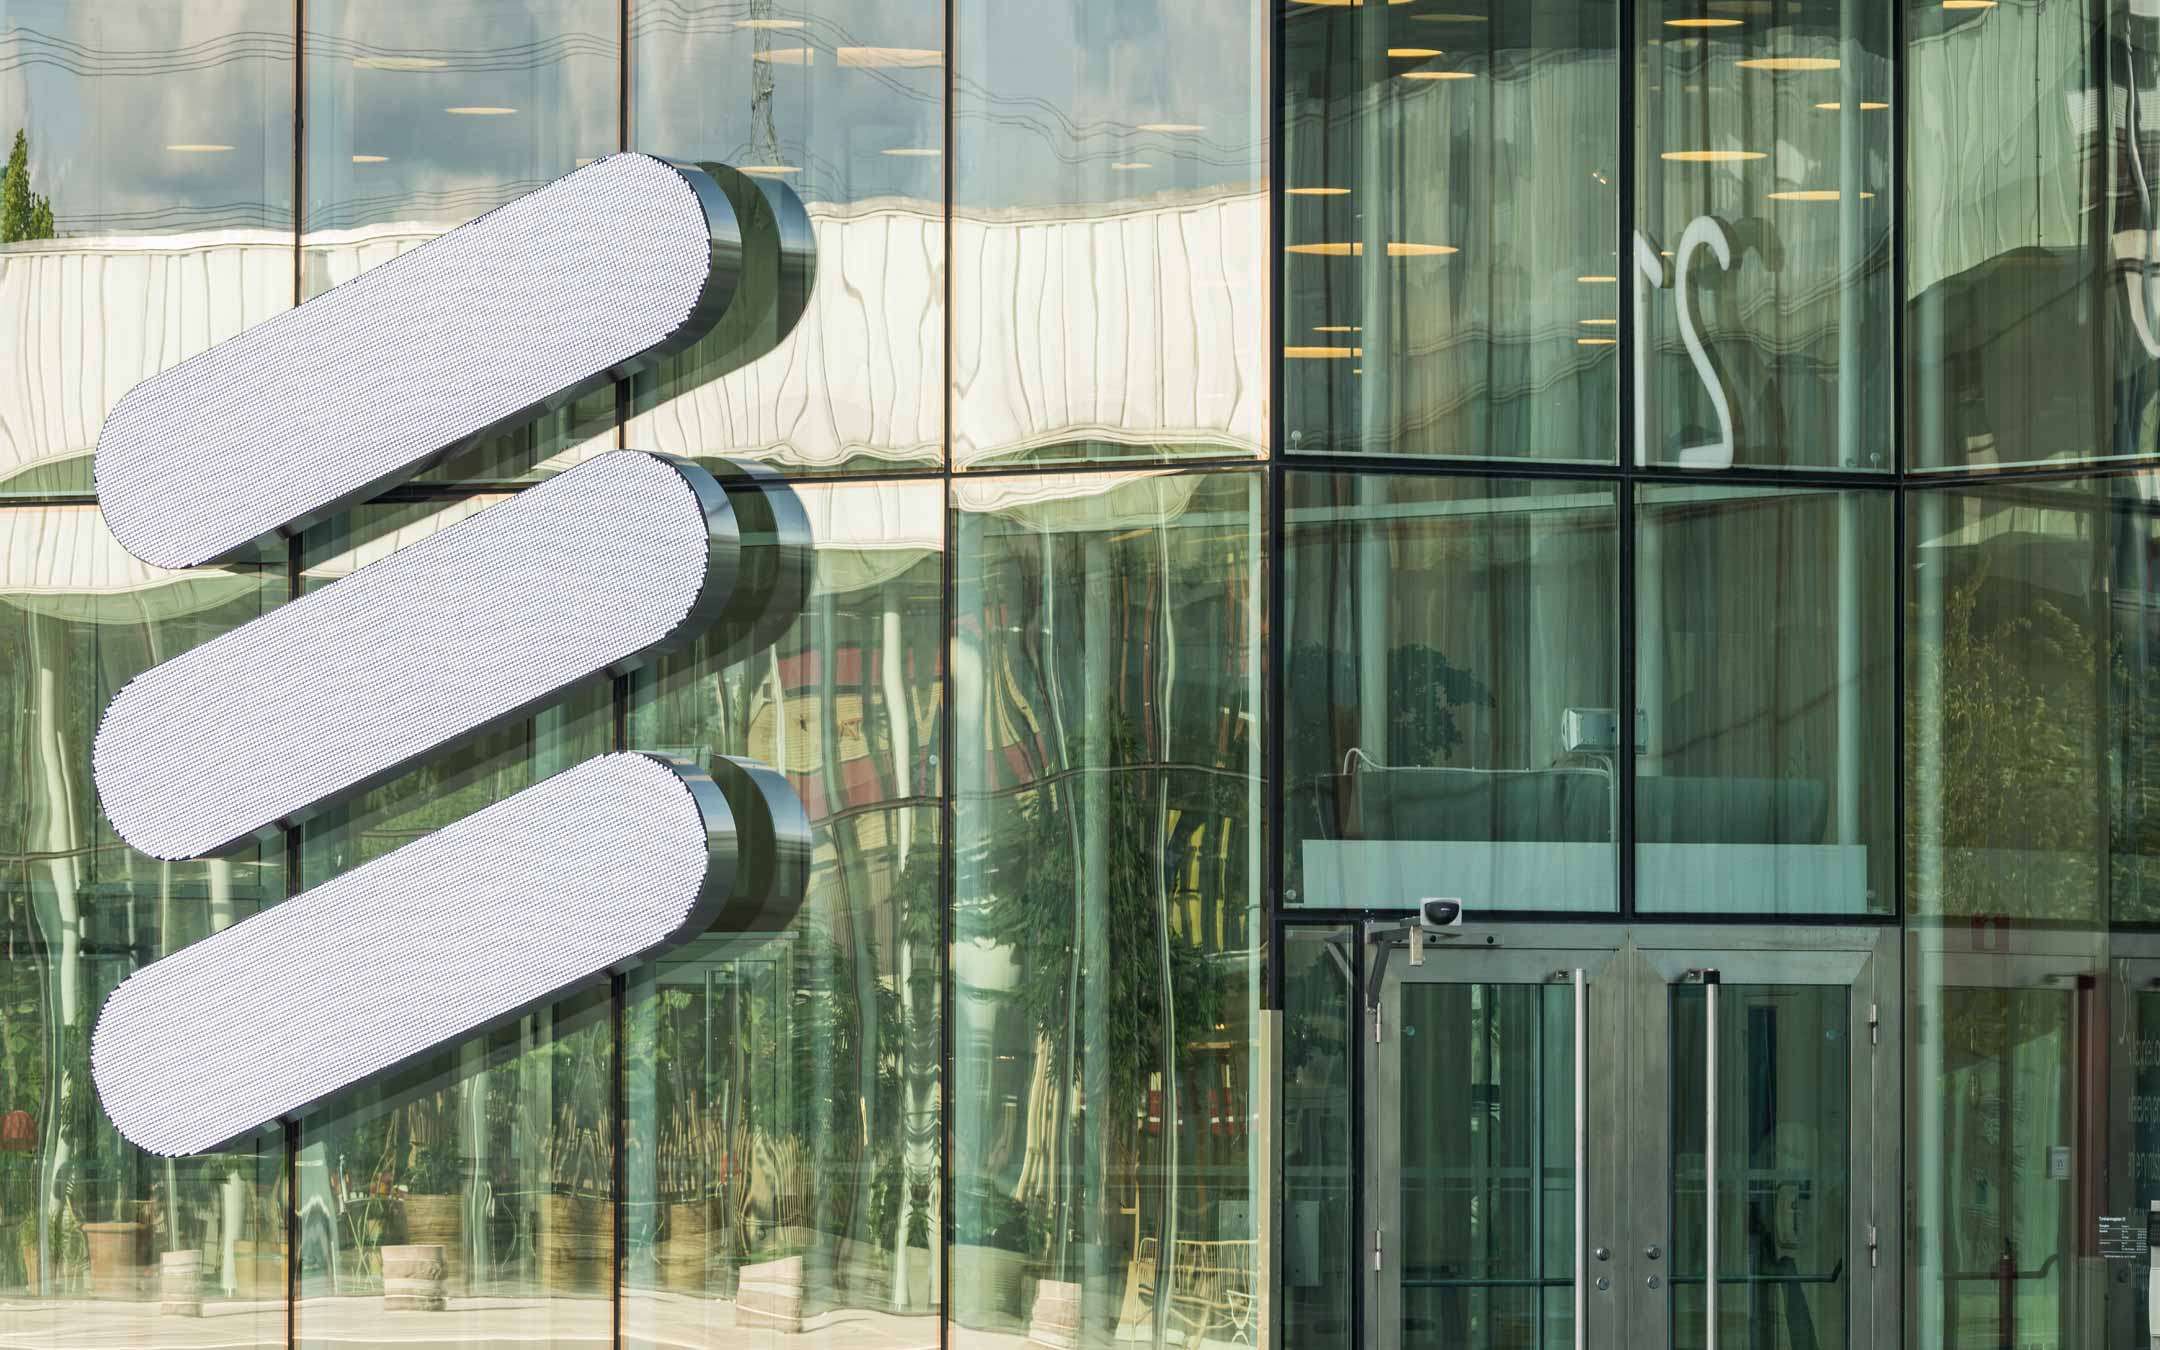 Ericsson: 1.1 billion for Cradlepoint 5G